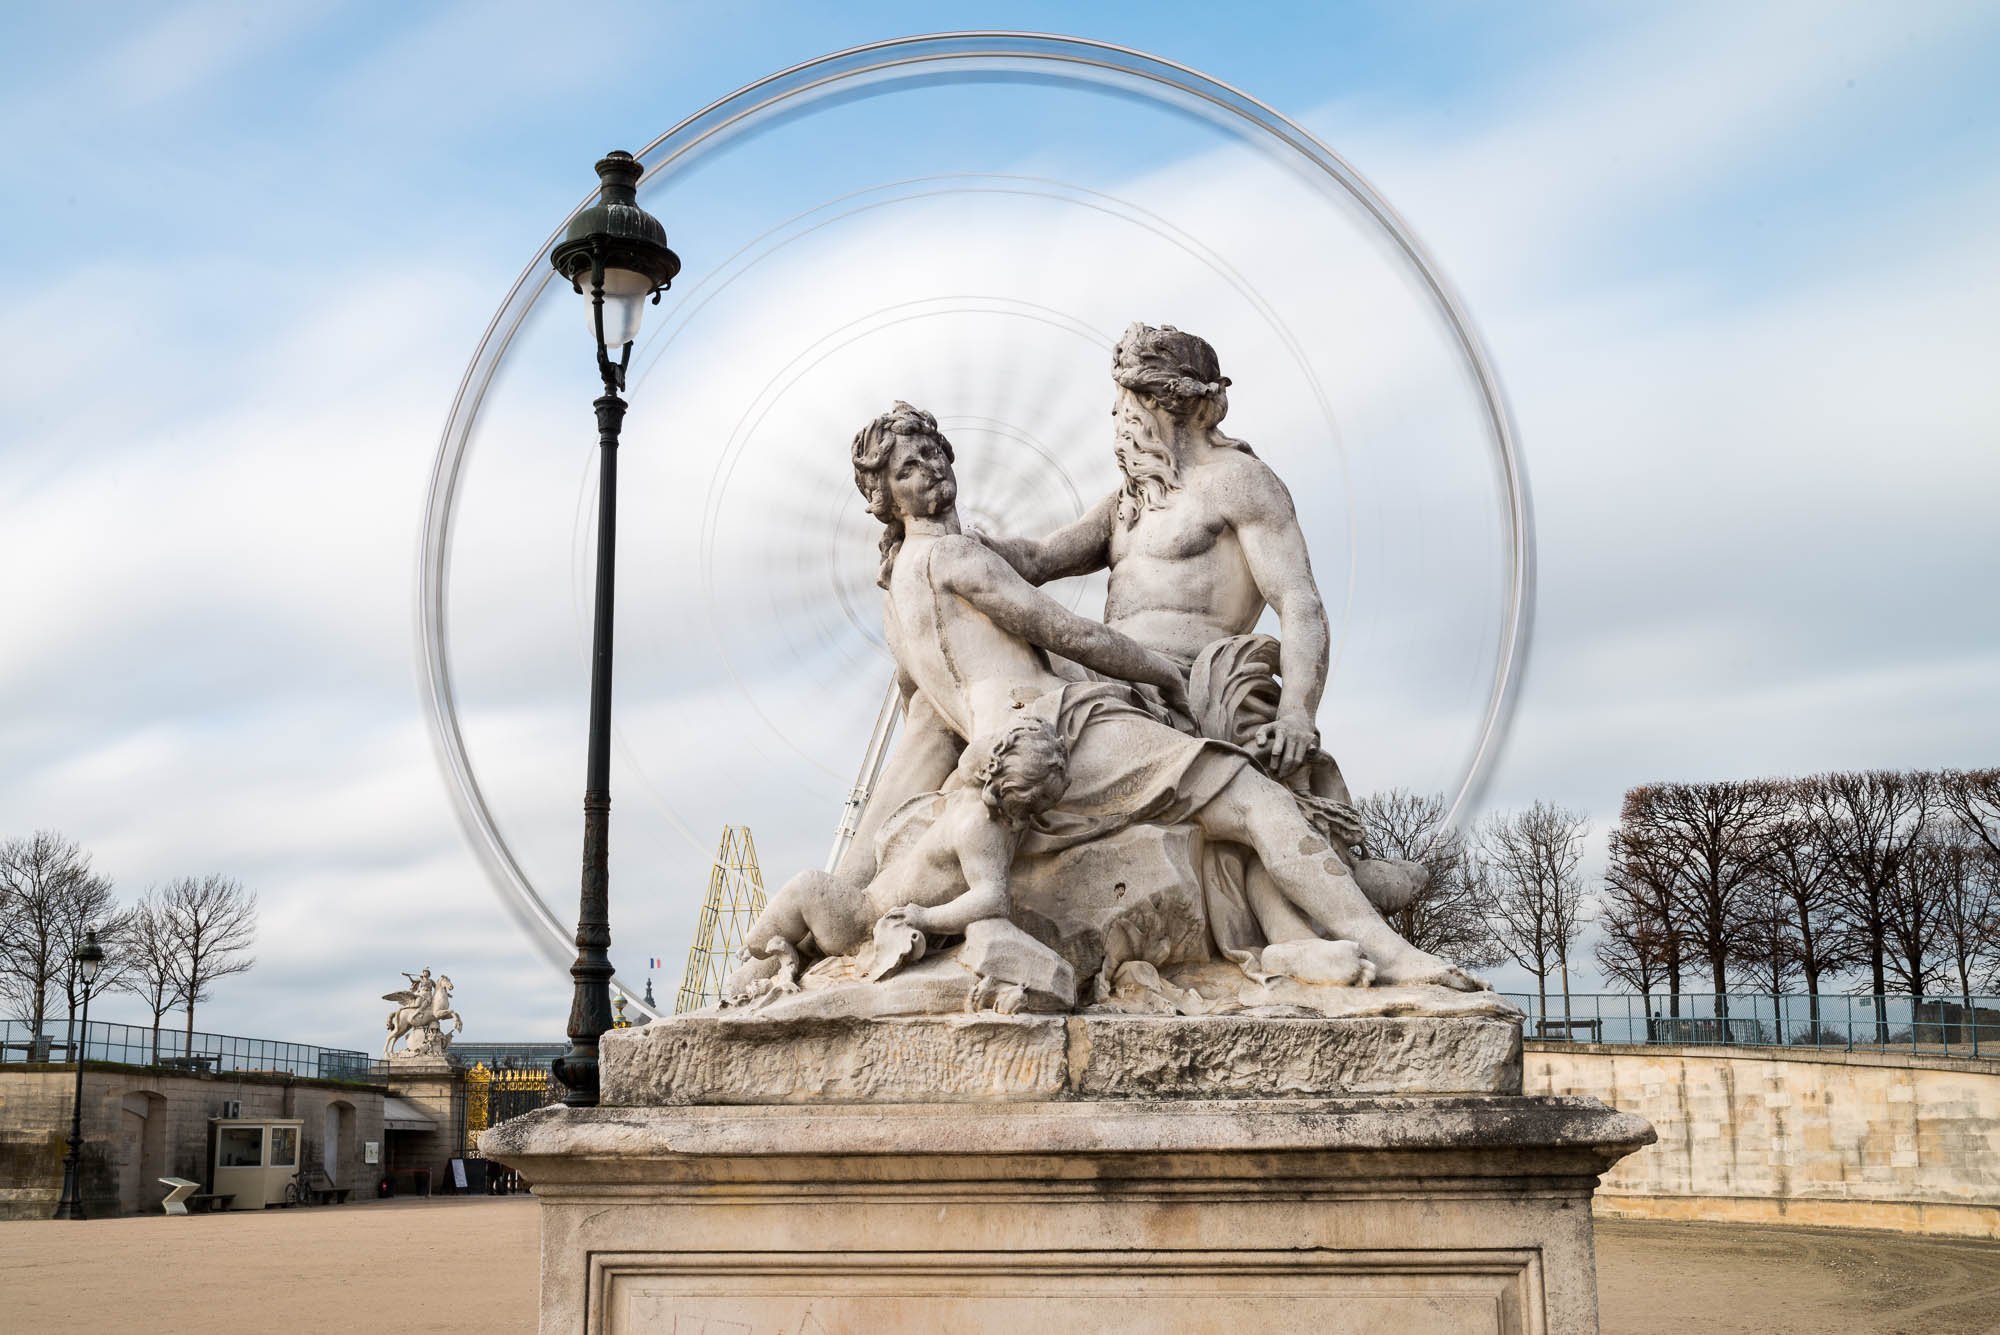 Jardin des Tuileries - filtre Nisi AR ND 1000 - 40mm, 20s, f/16, ISO 100 - © Damien Roué